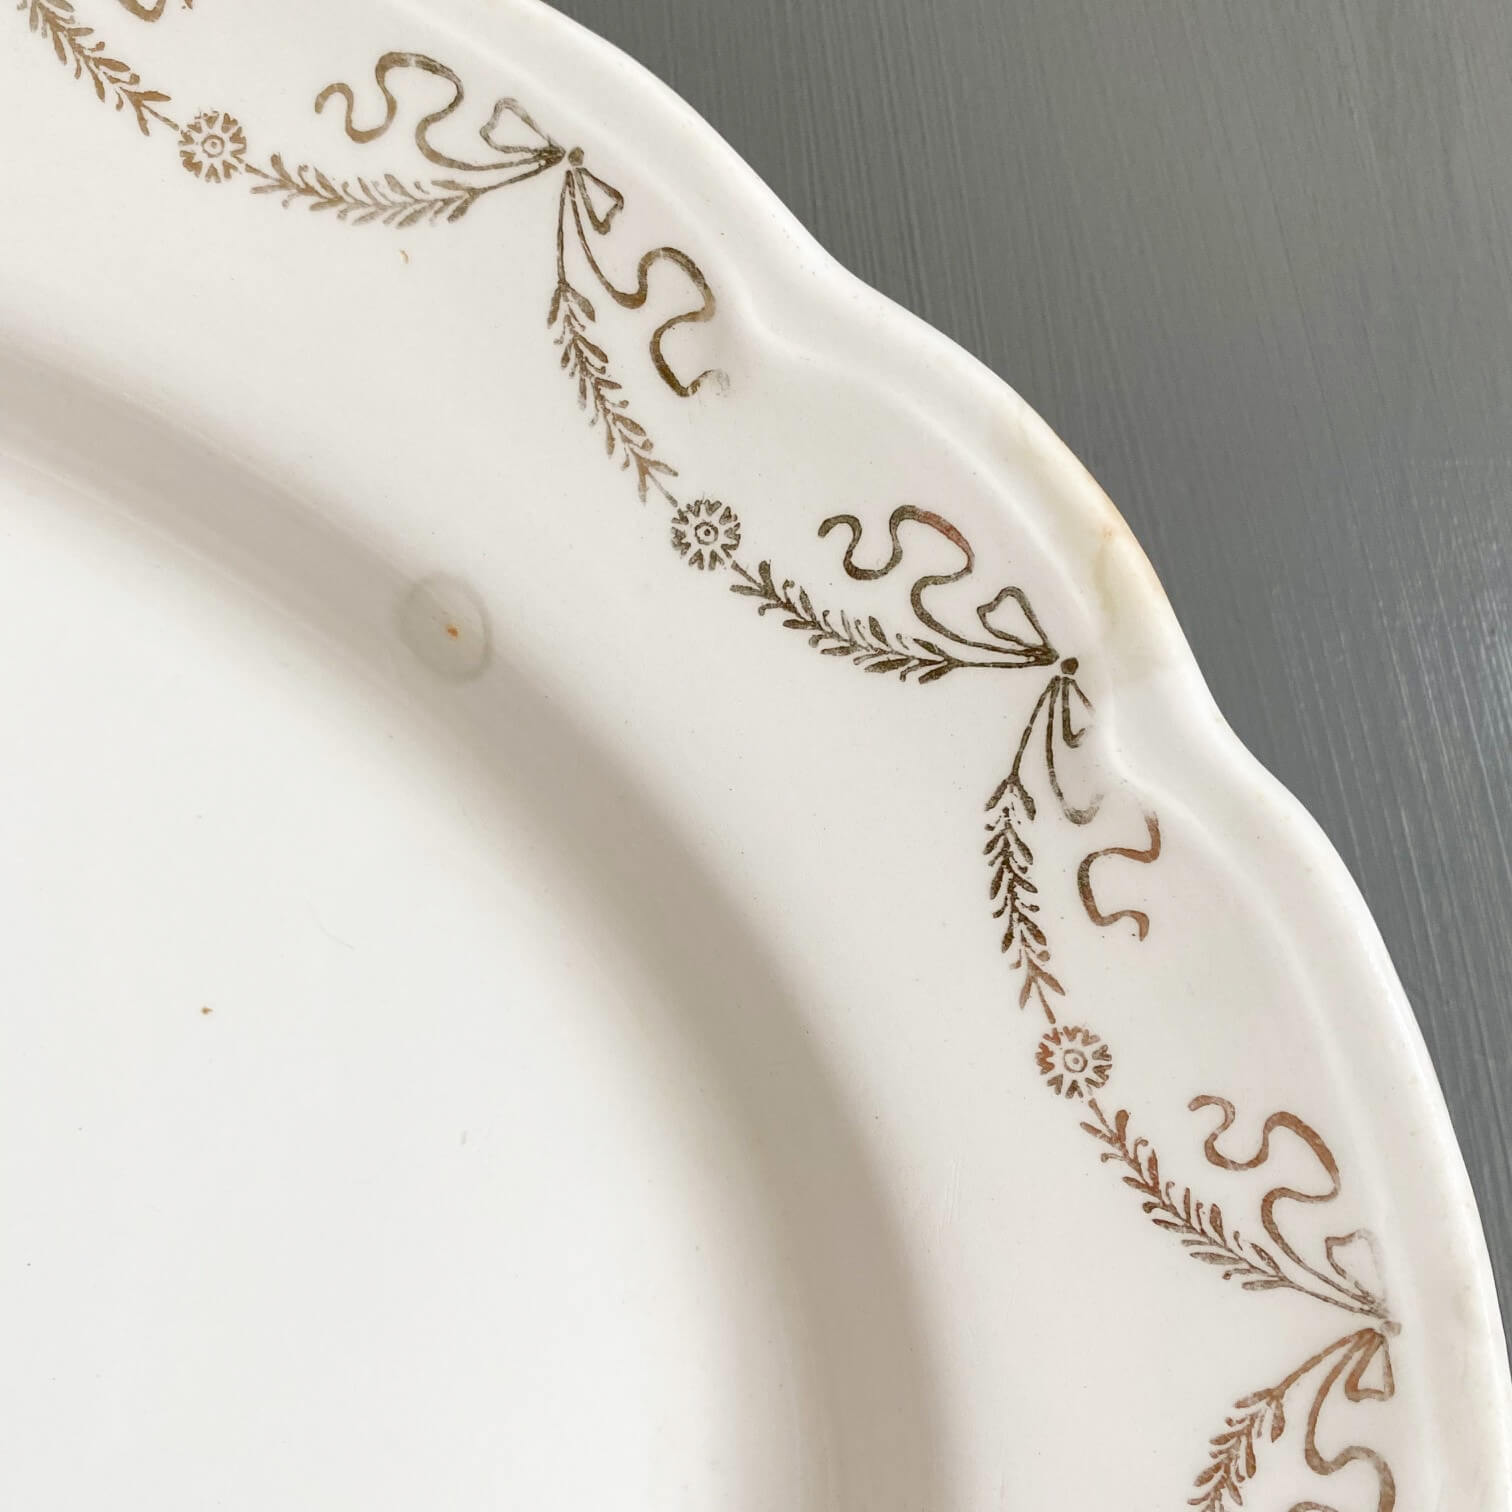 Antique Knowles Taylor Knowles Platter - Semi Vitreous Porcelain circa 1875-1885